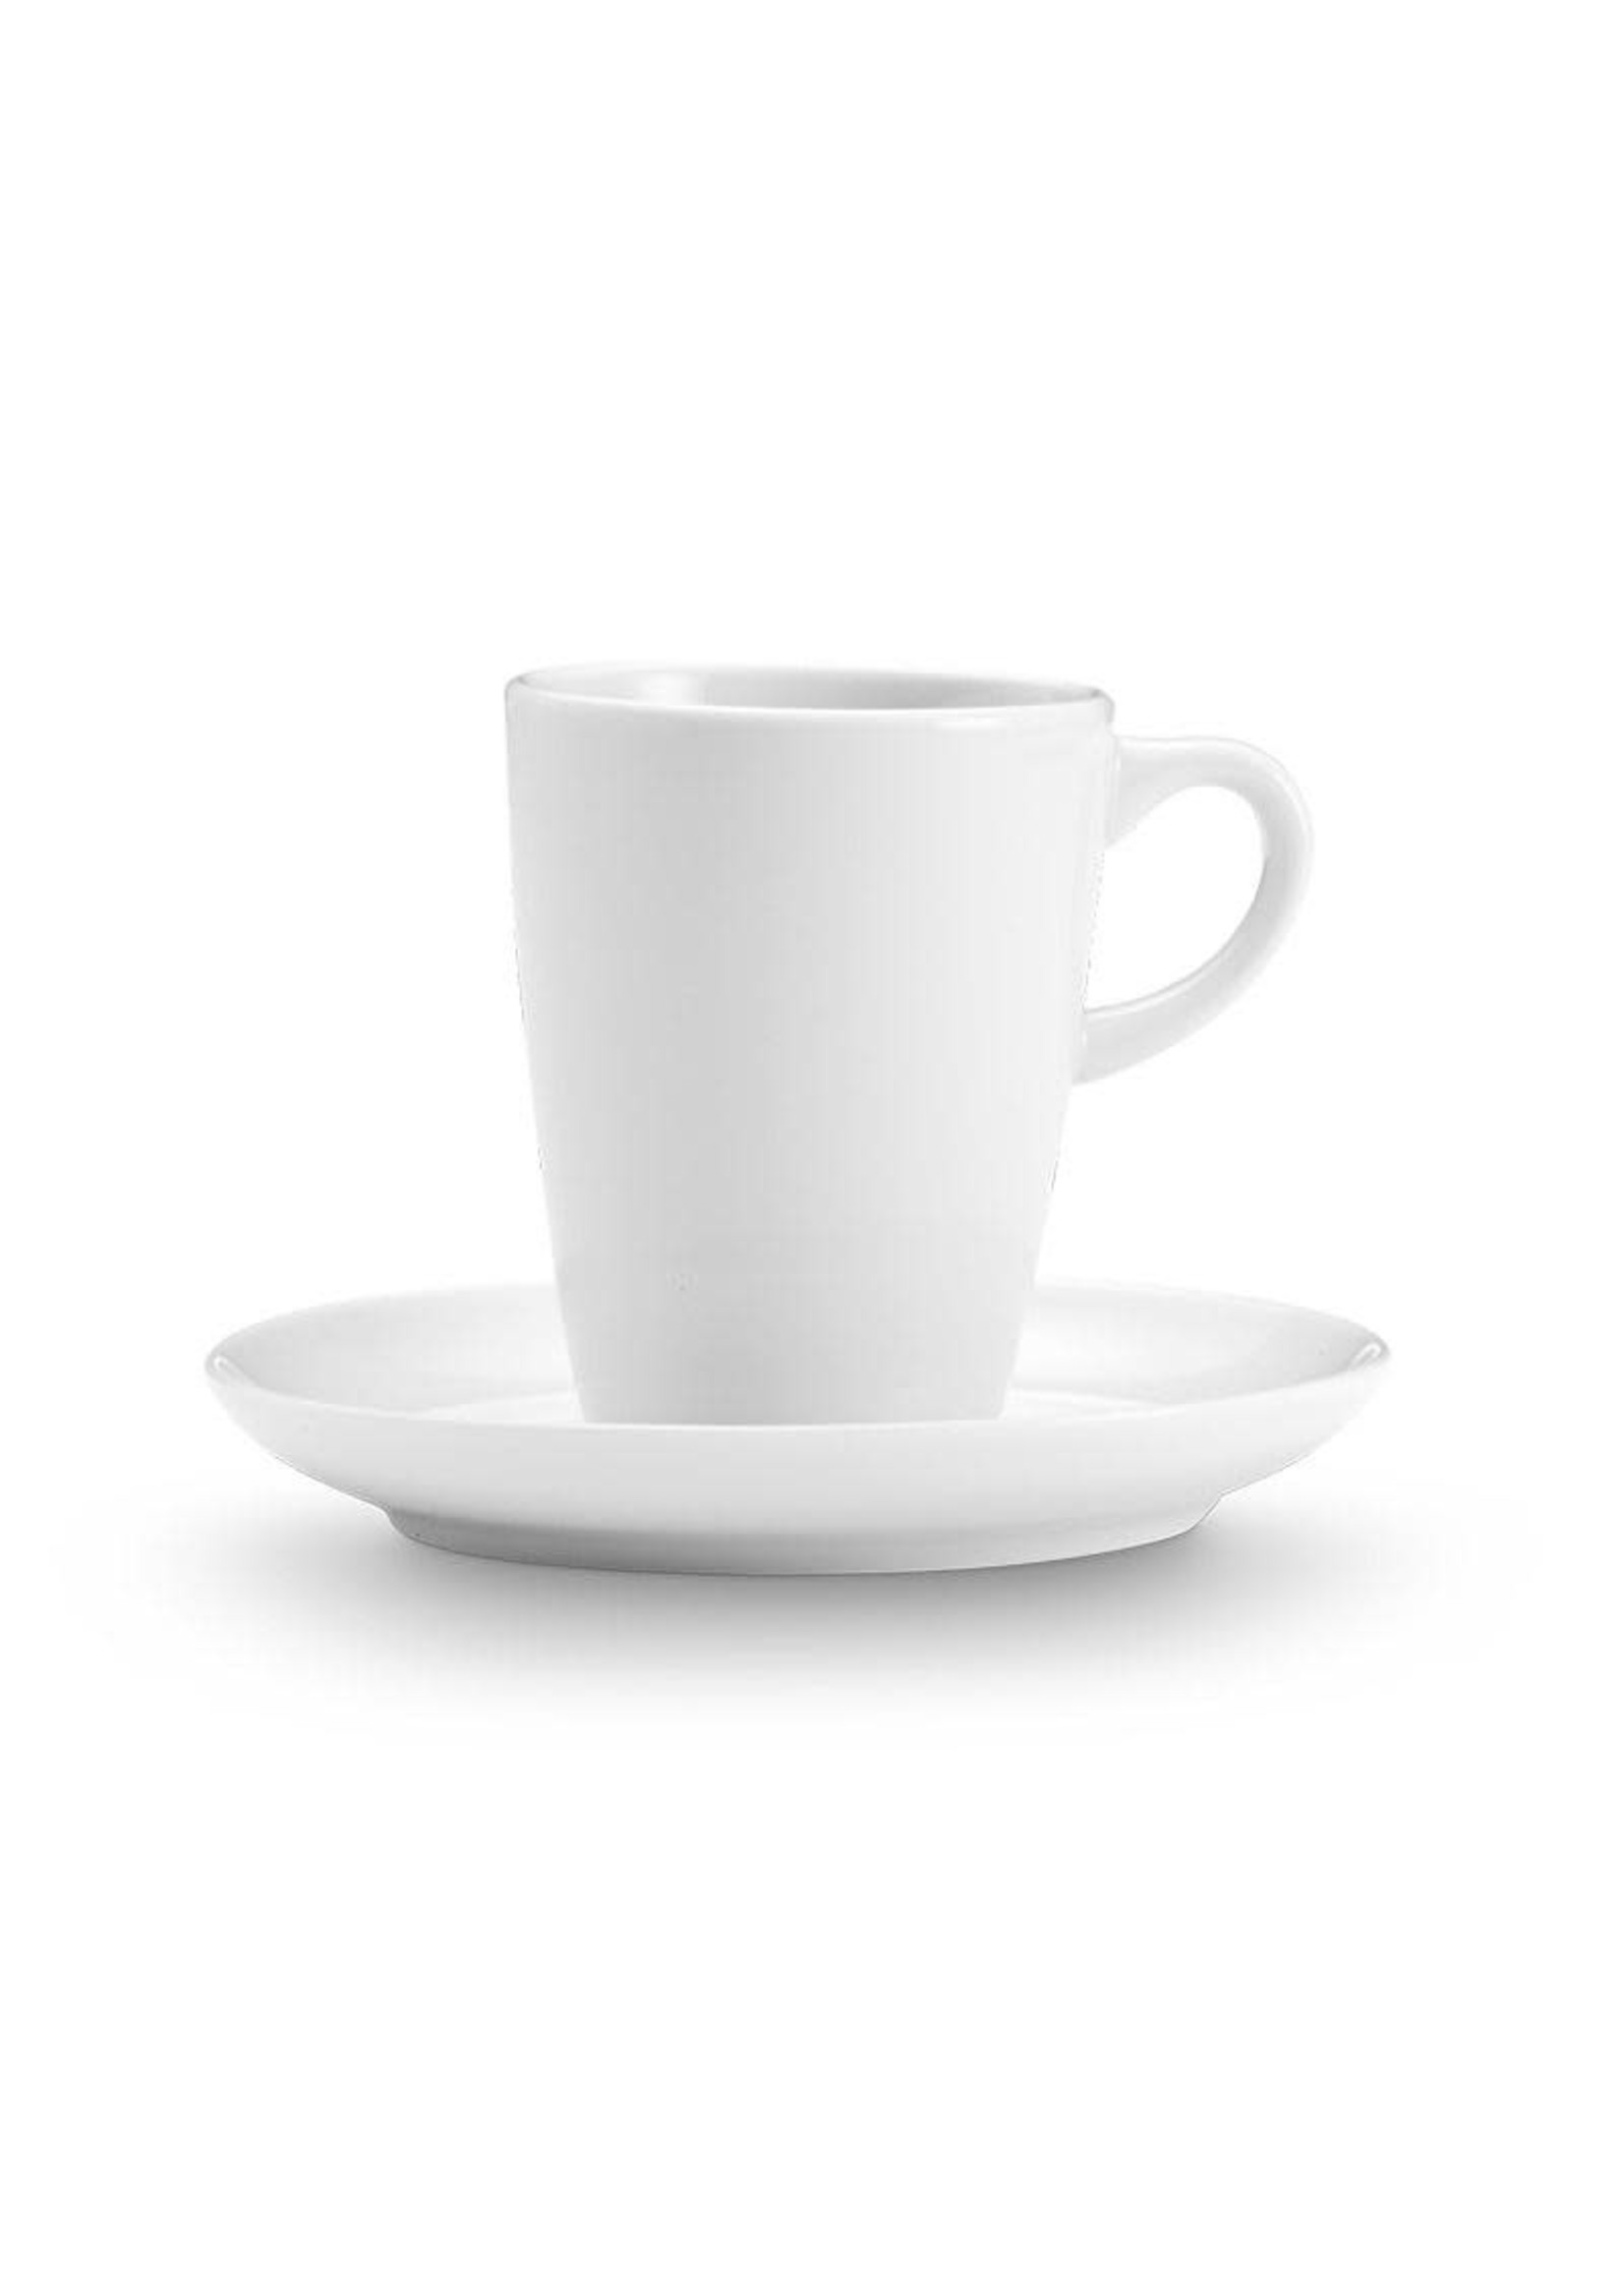 Eden 2 oz. Espresso Cup, Set of 4 – Pillivuyt Shop